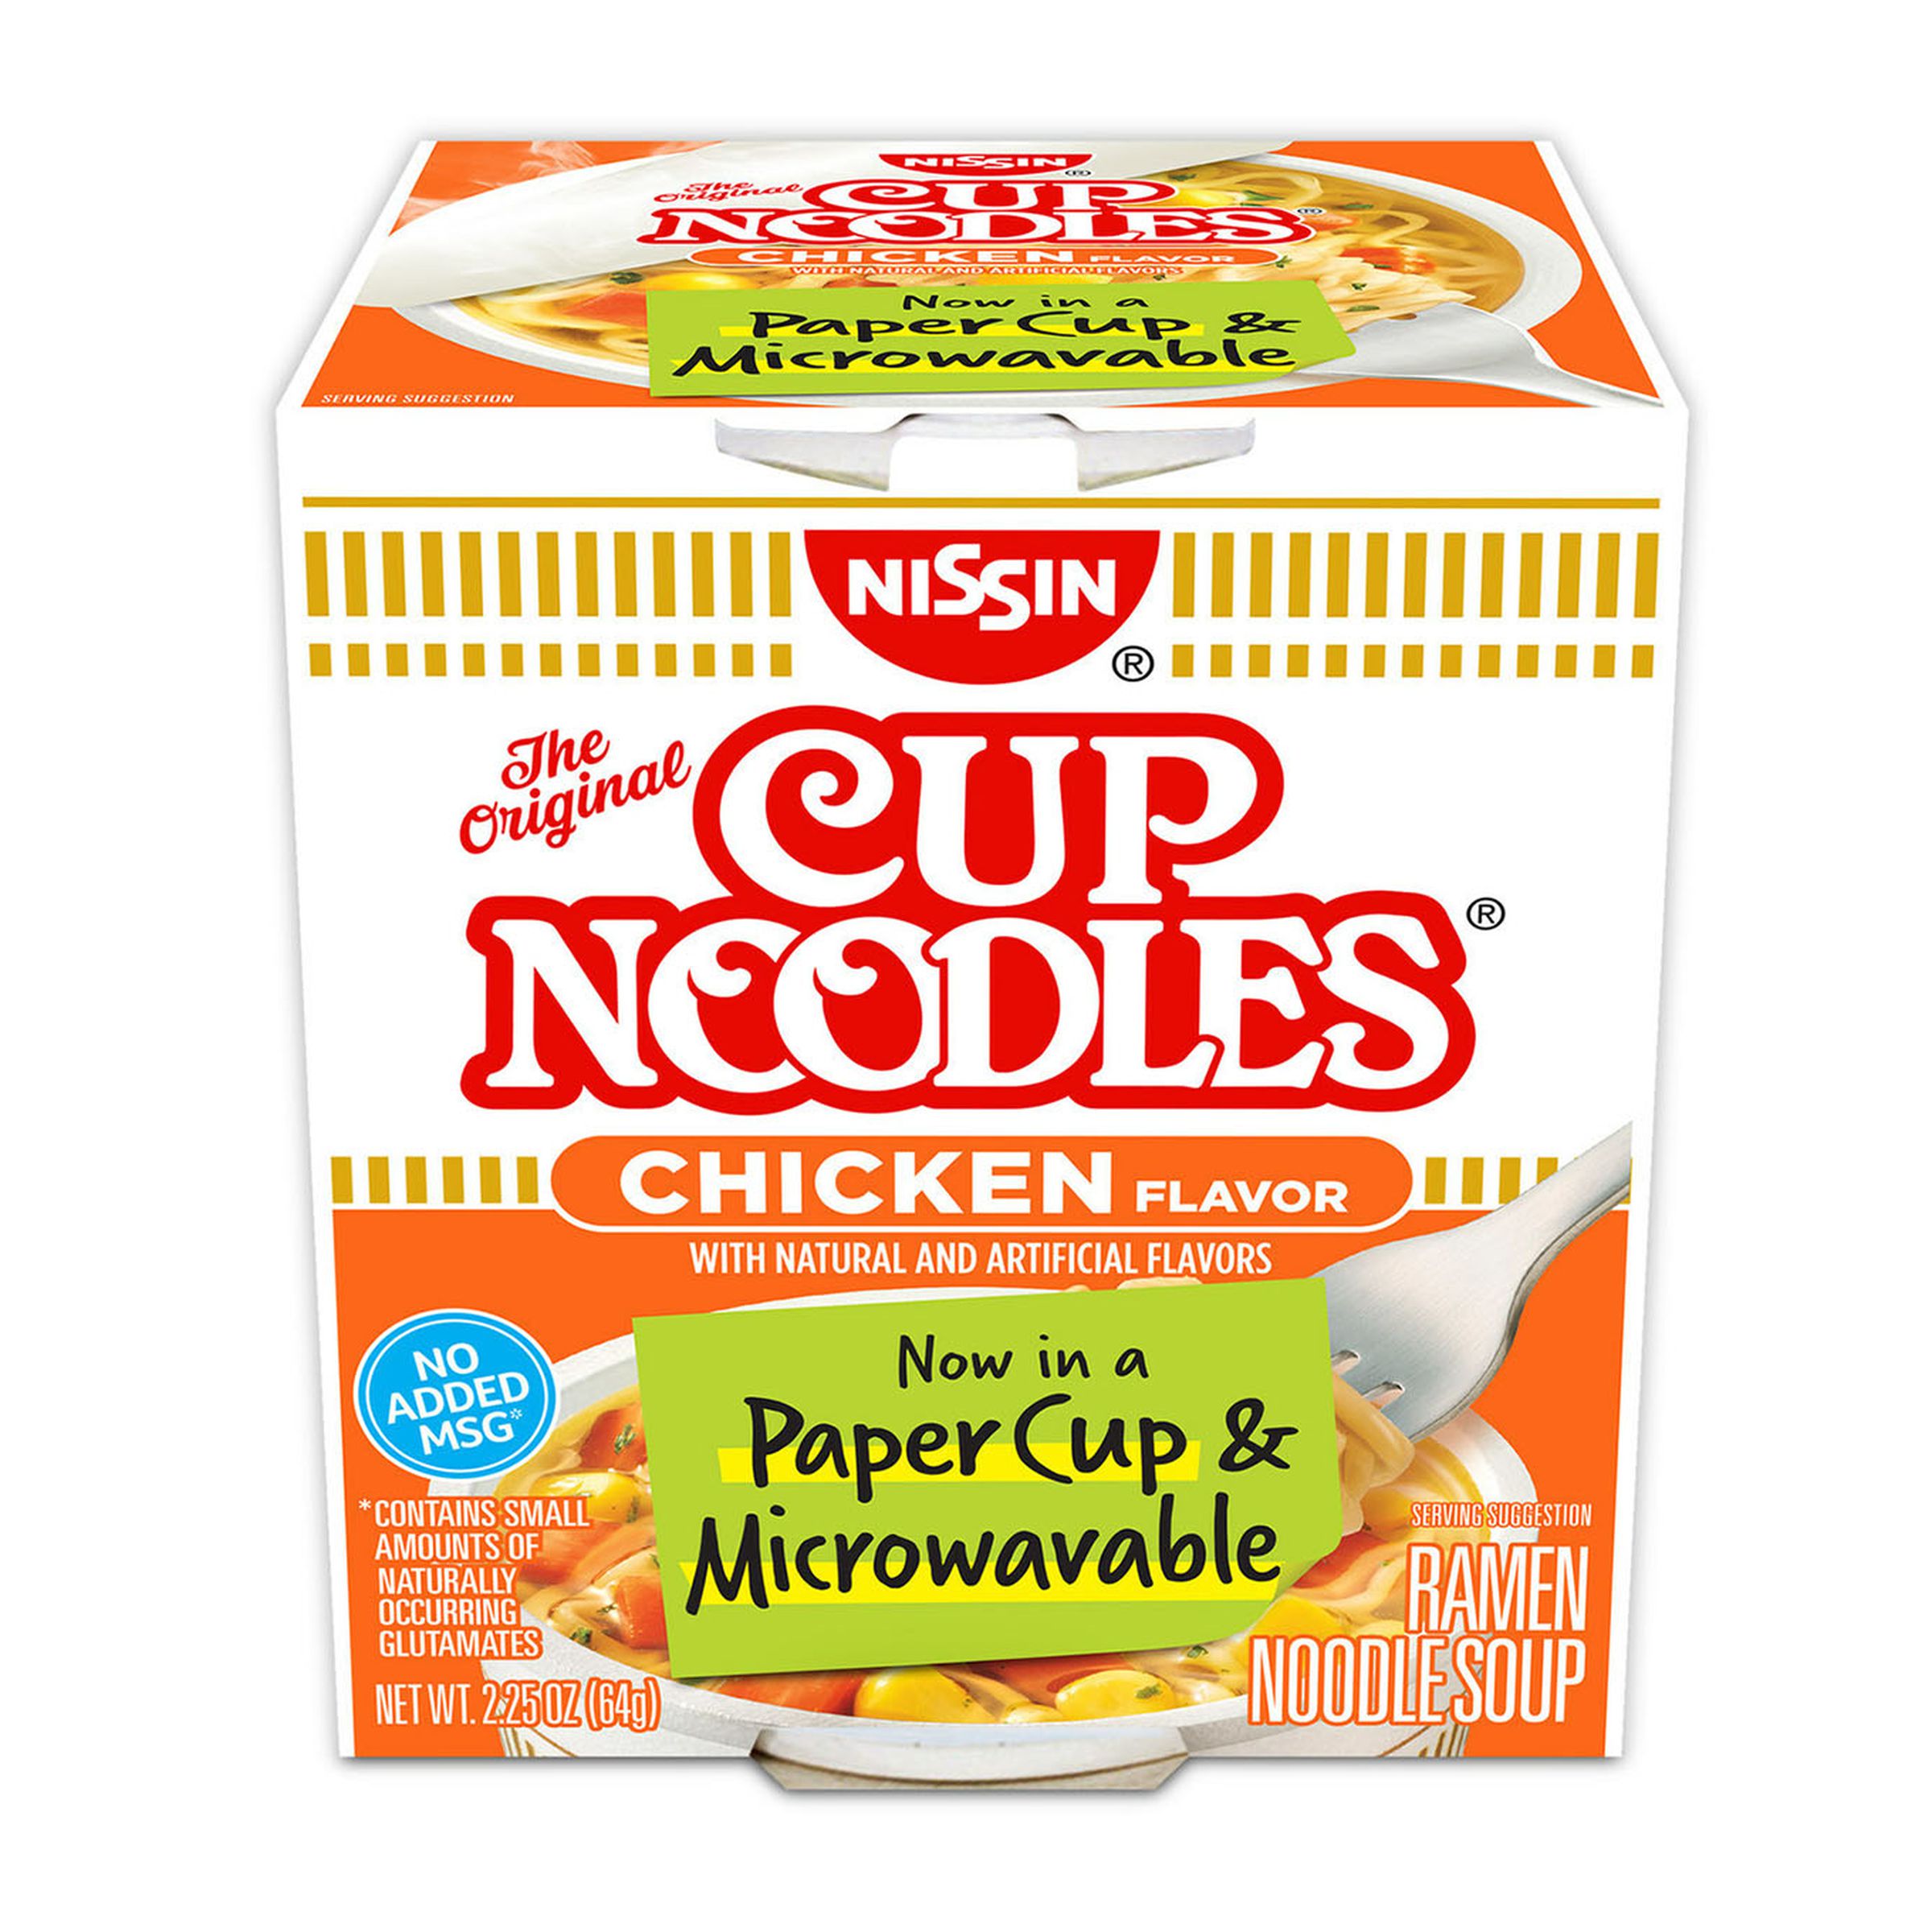 Render of Nissin’s microwavable Cup Noodles packaging.